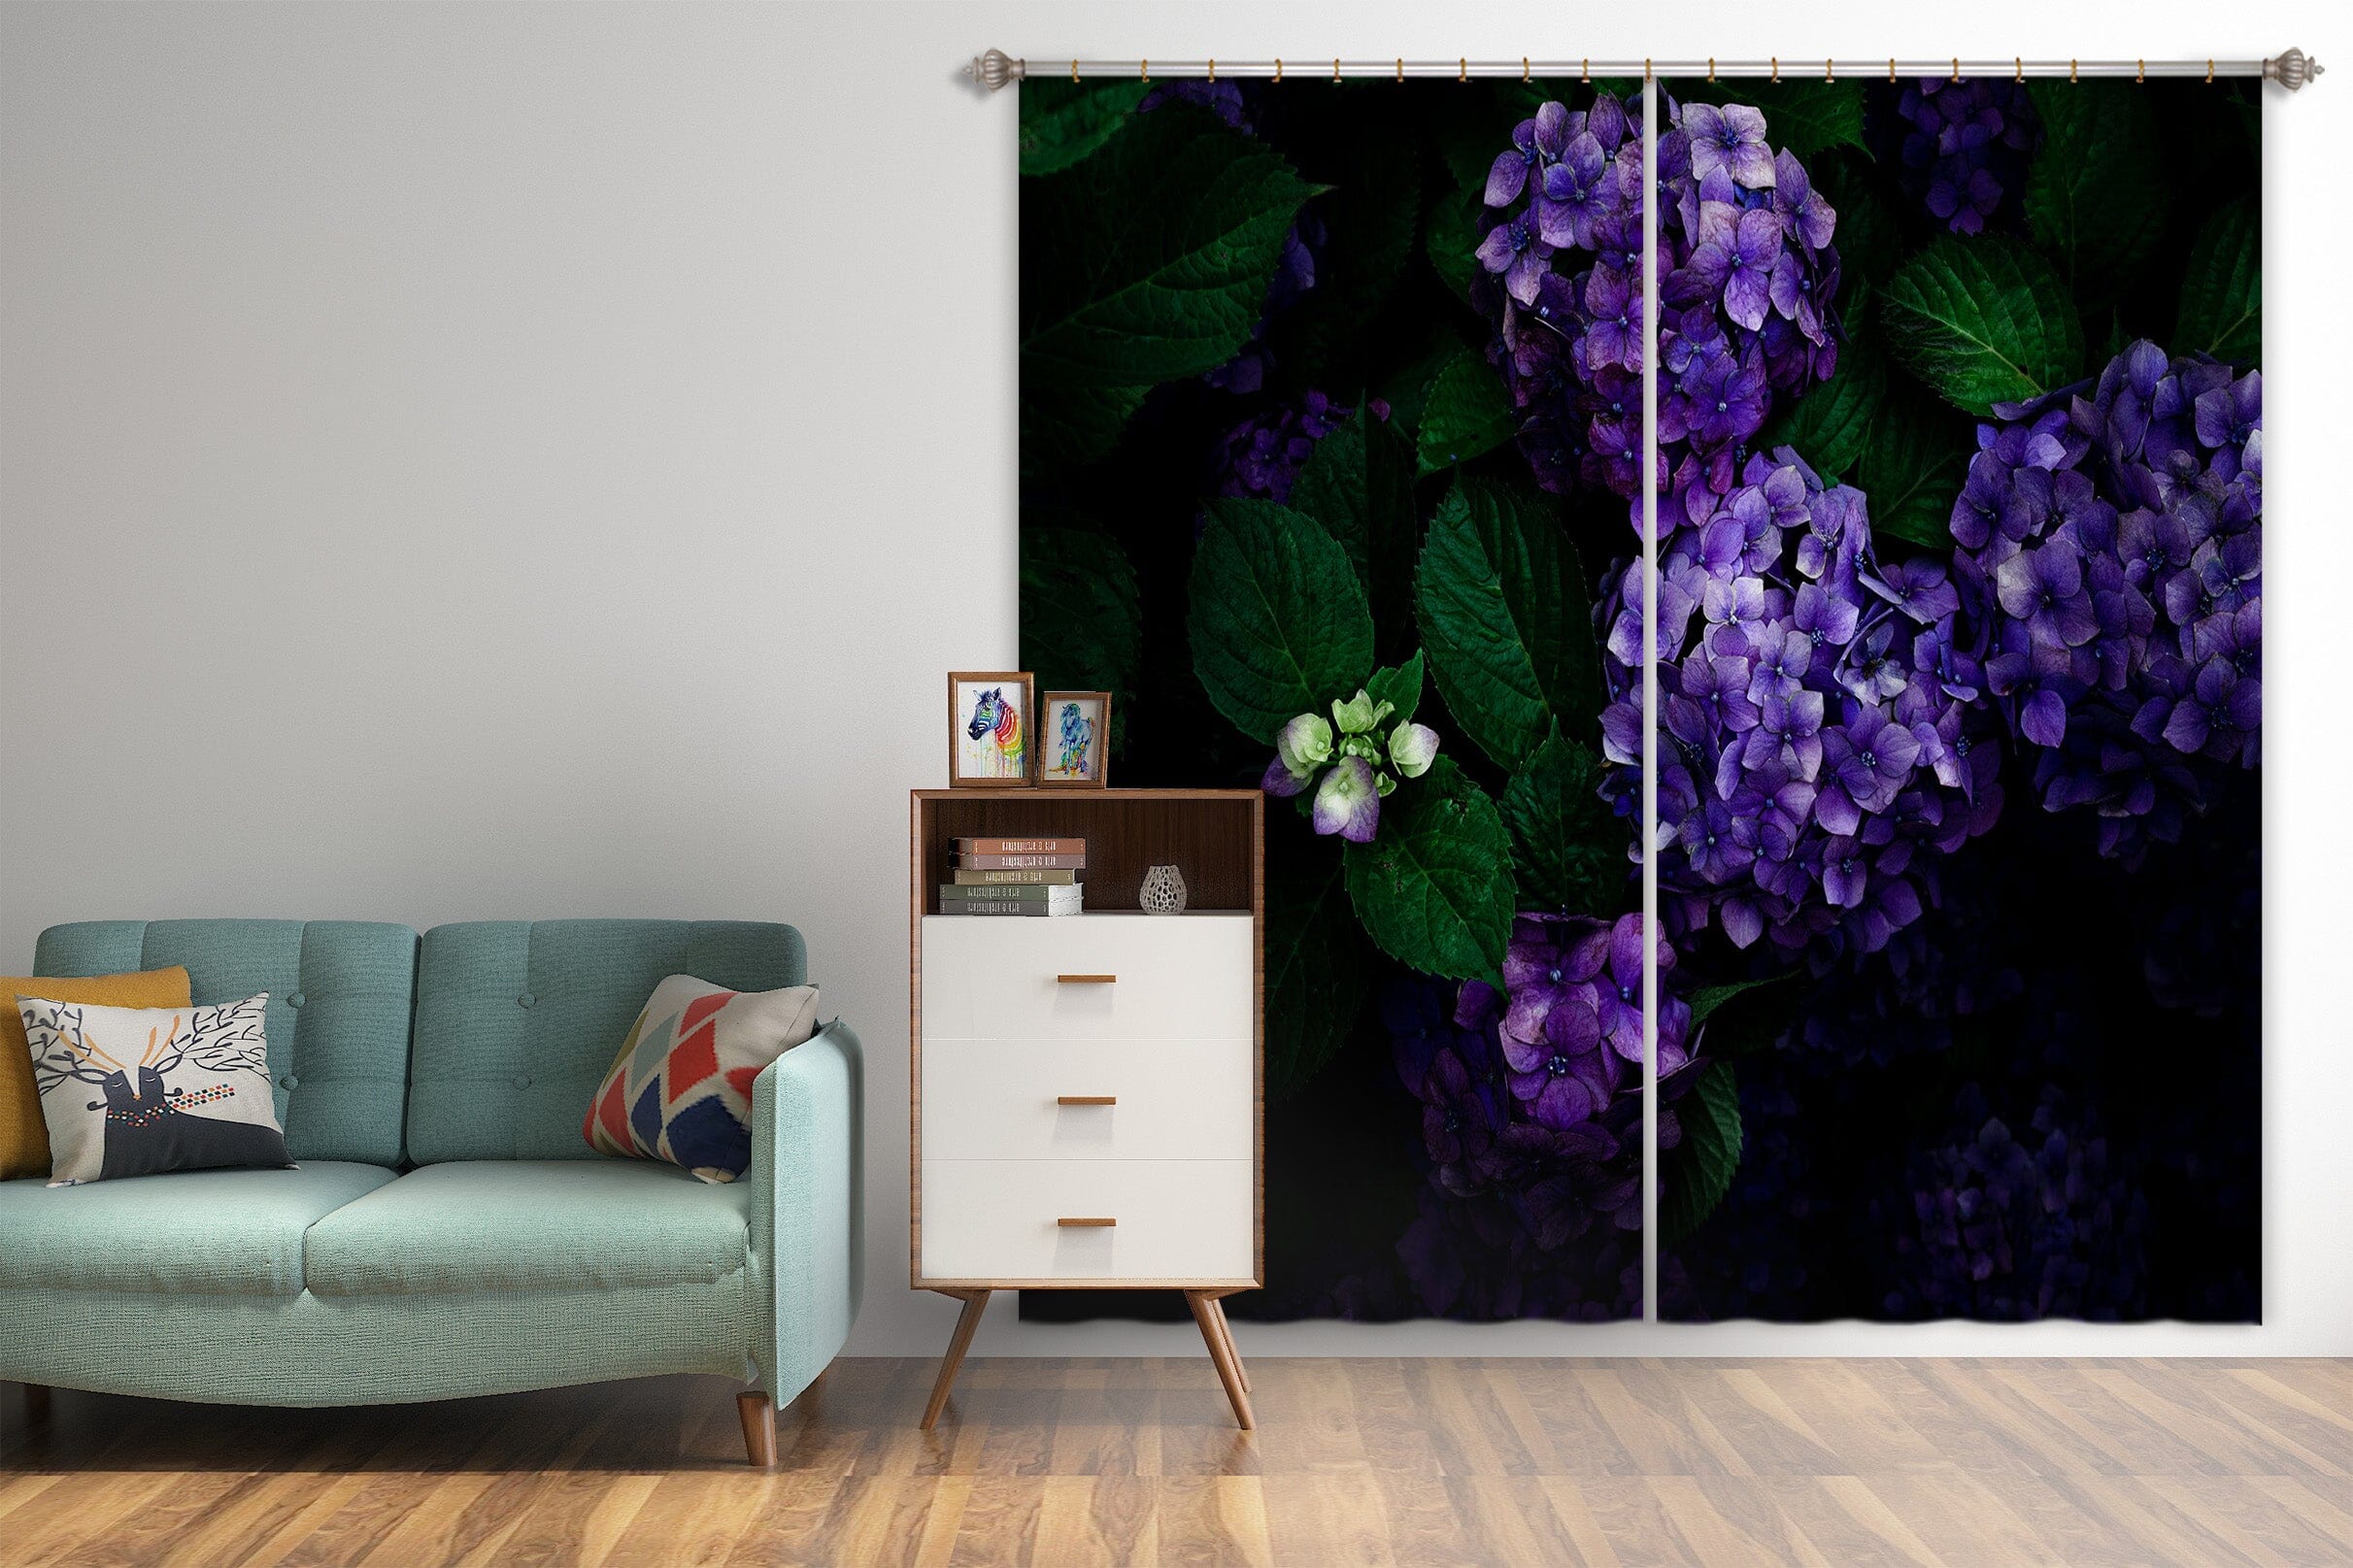 3D Purple Hydrangea 055 Noirblanc777 Curtain Curtains Drapes Curtains AJ Creativity Home 